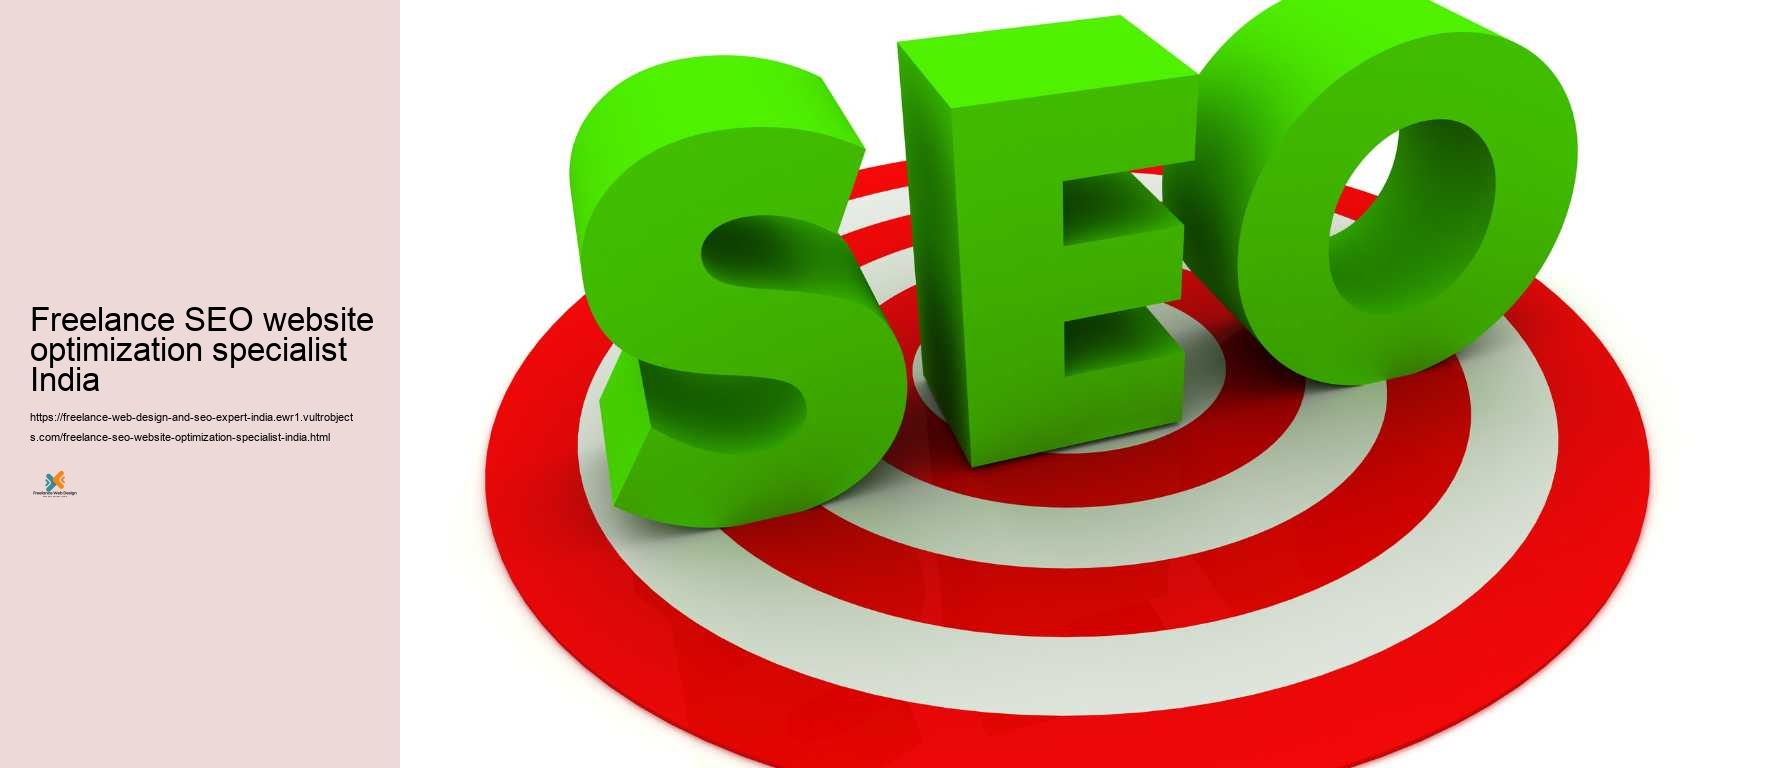 Freelance SEO website optimization specialist India